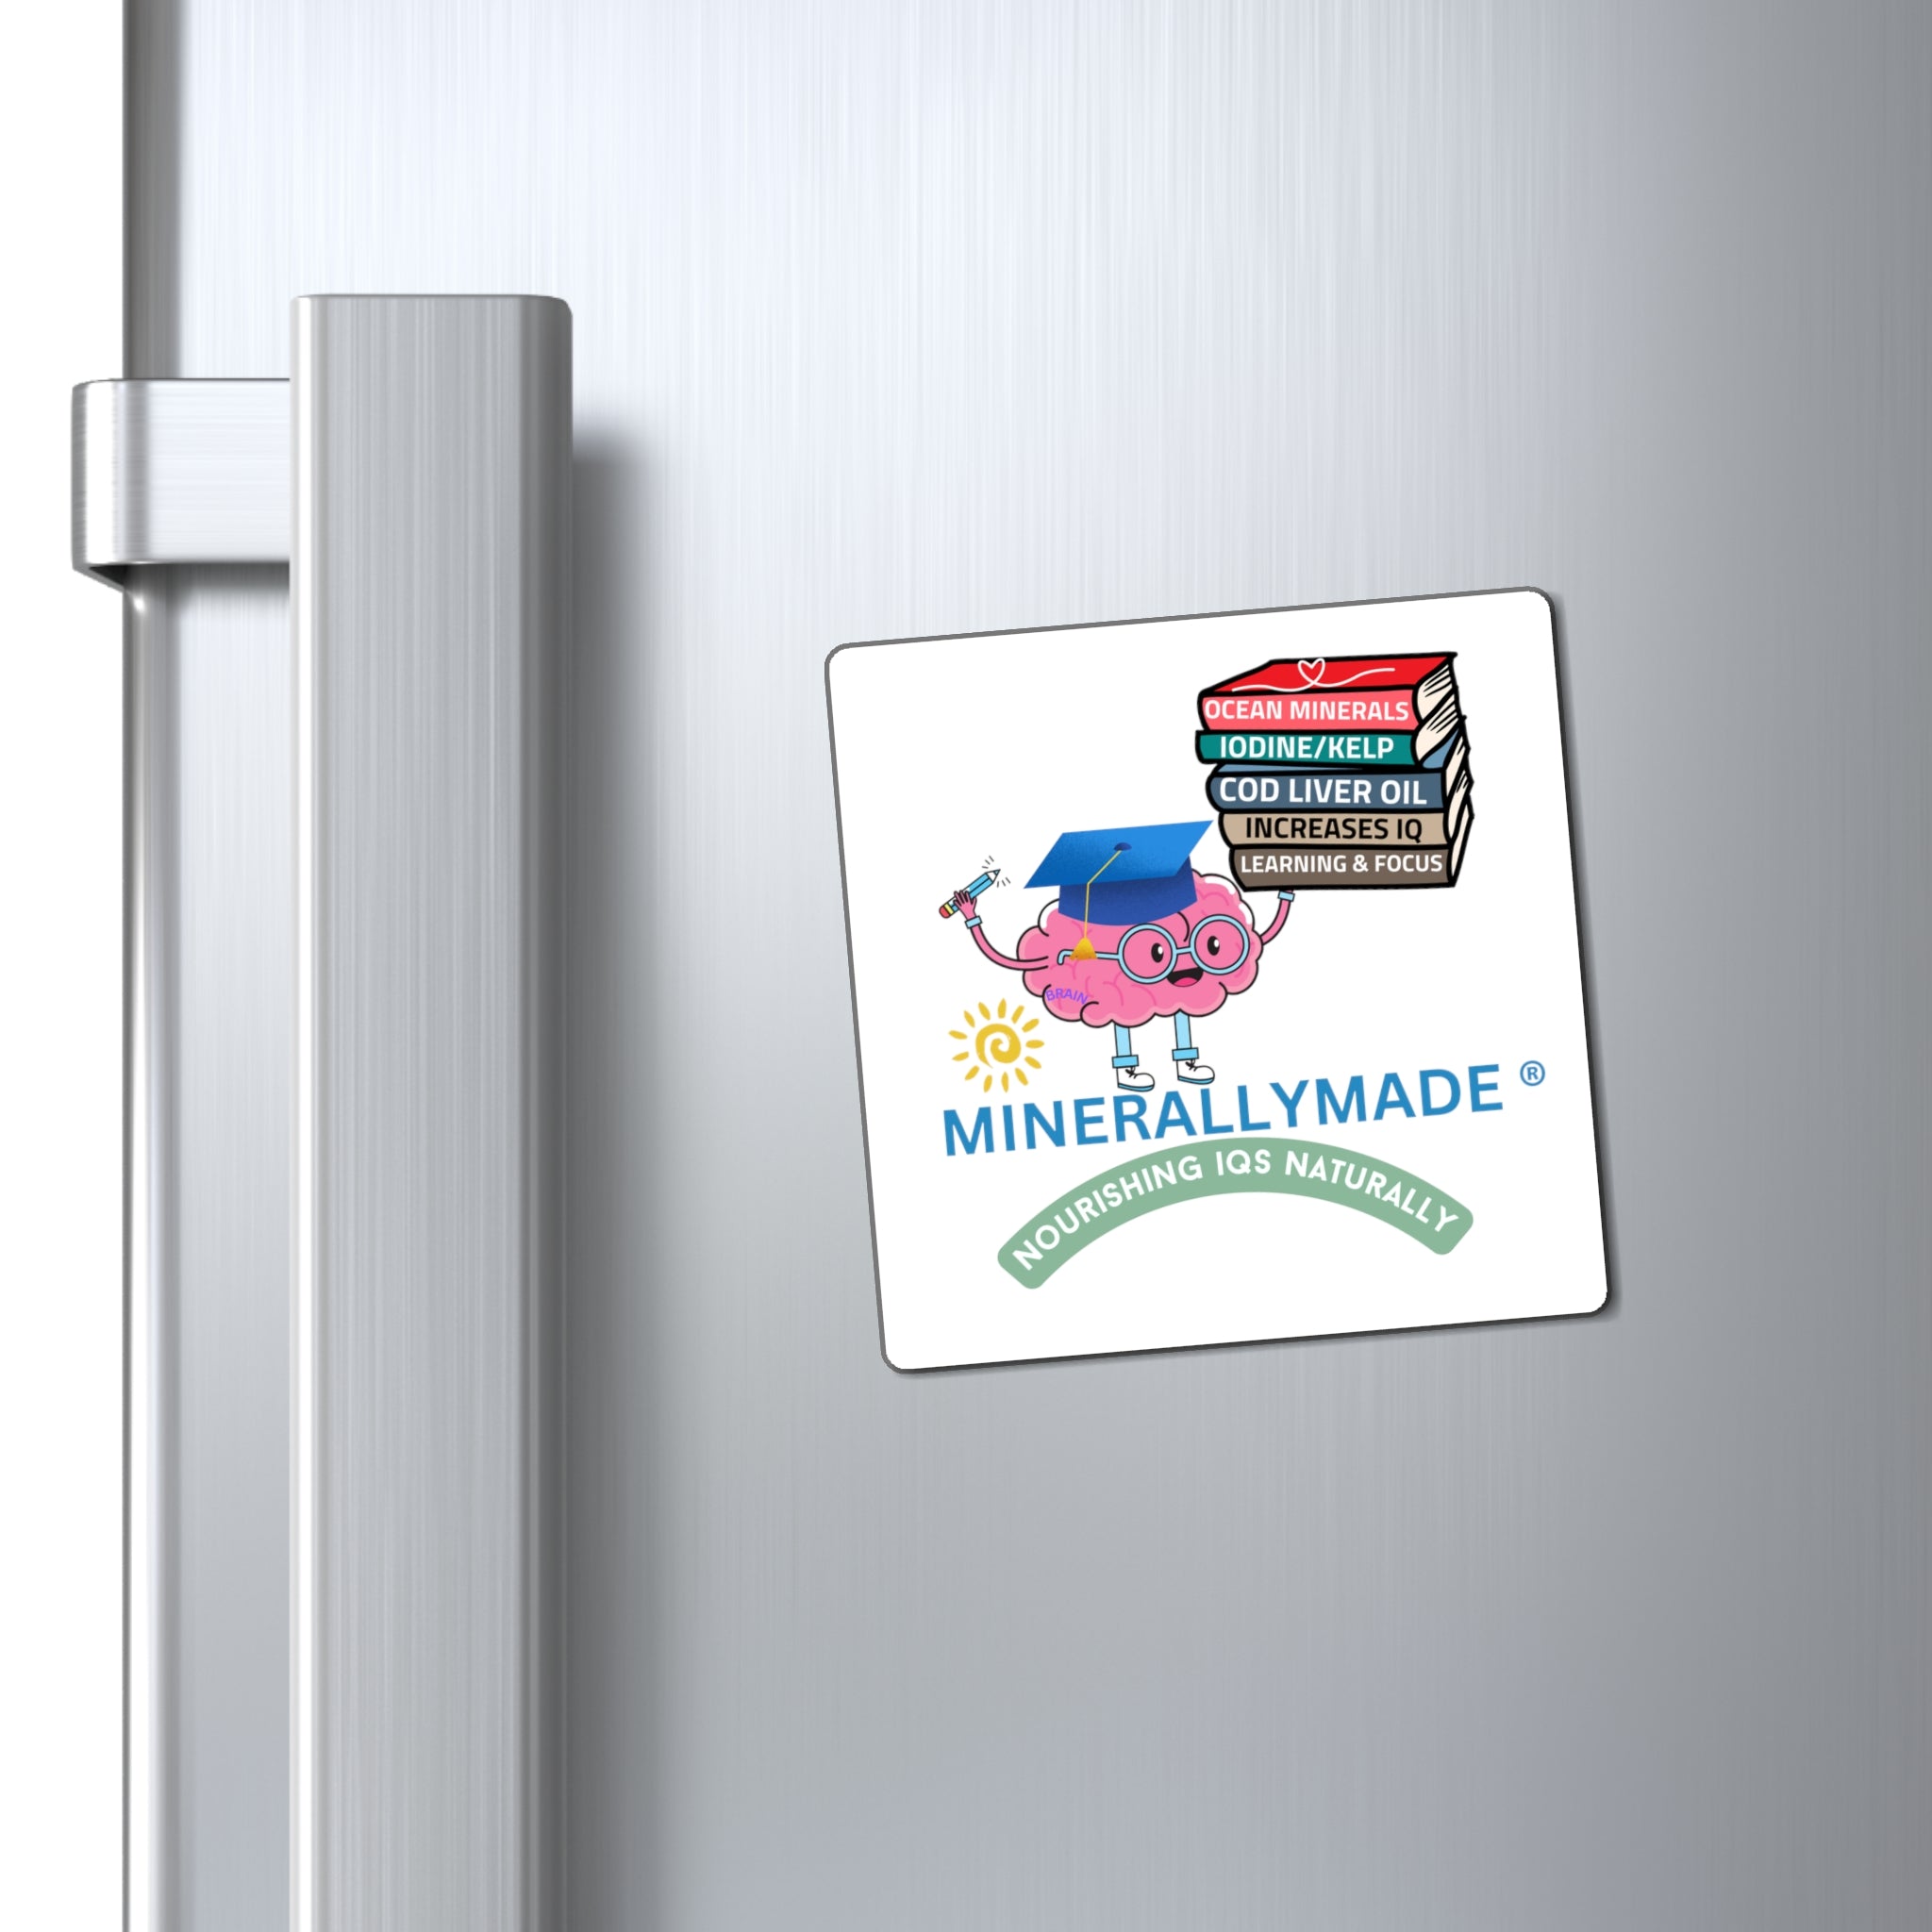 Minerallymade | Nourishing IQs Naturally | Refrigerator Magnet